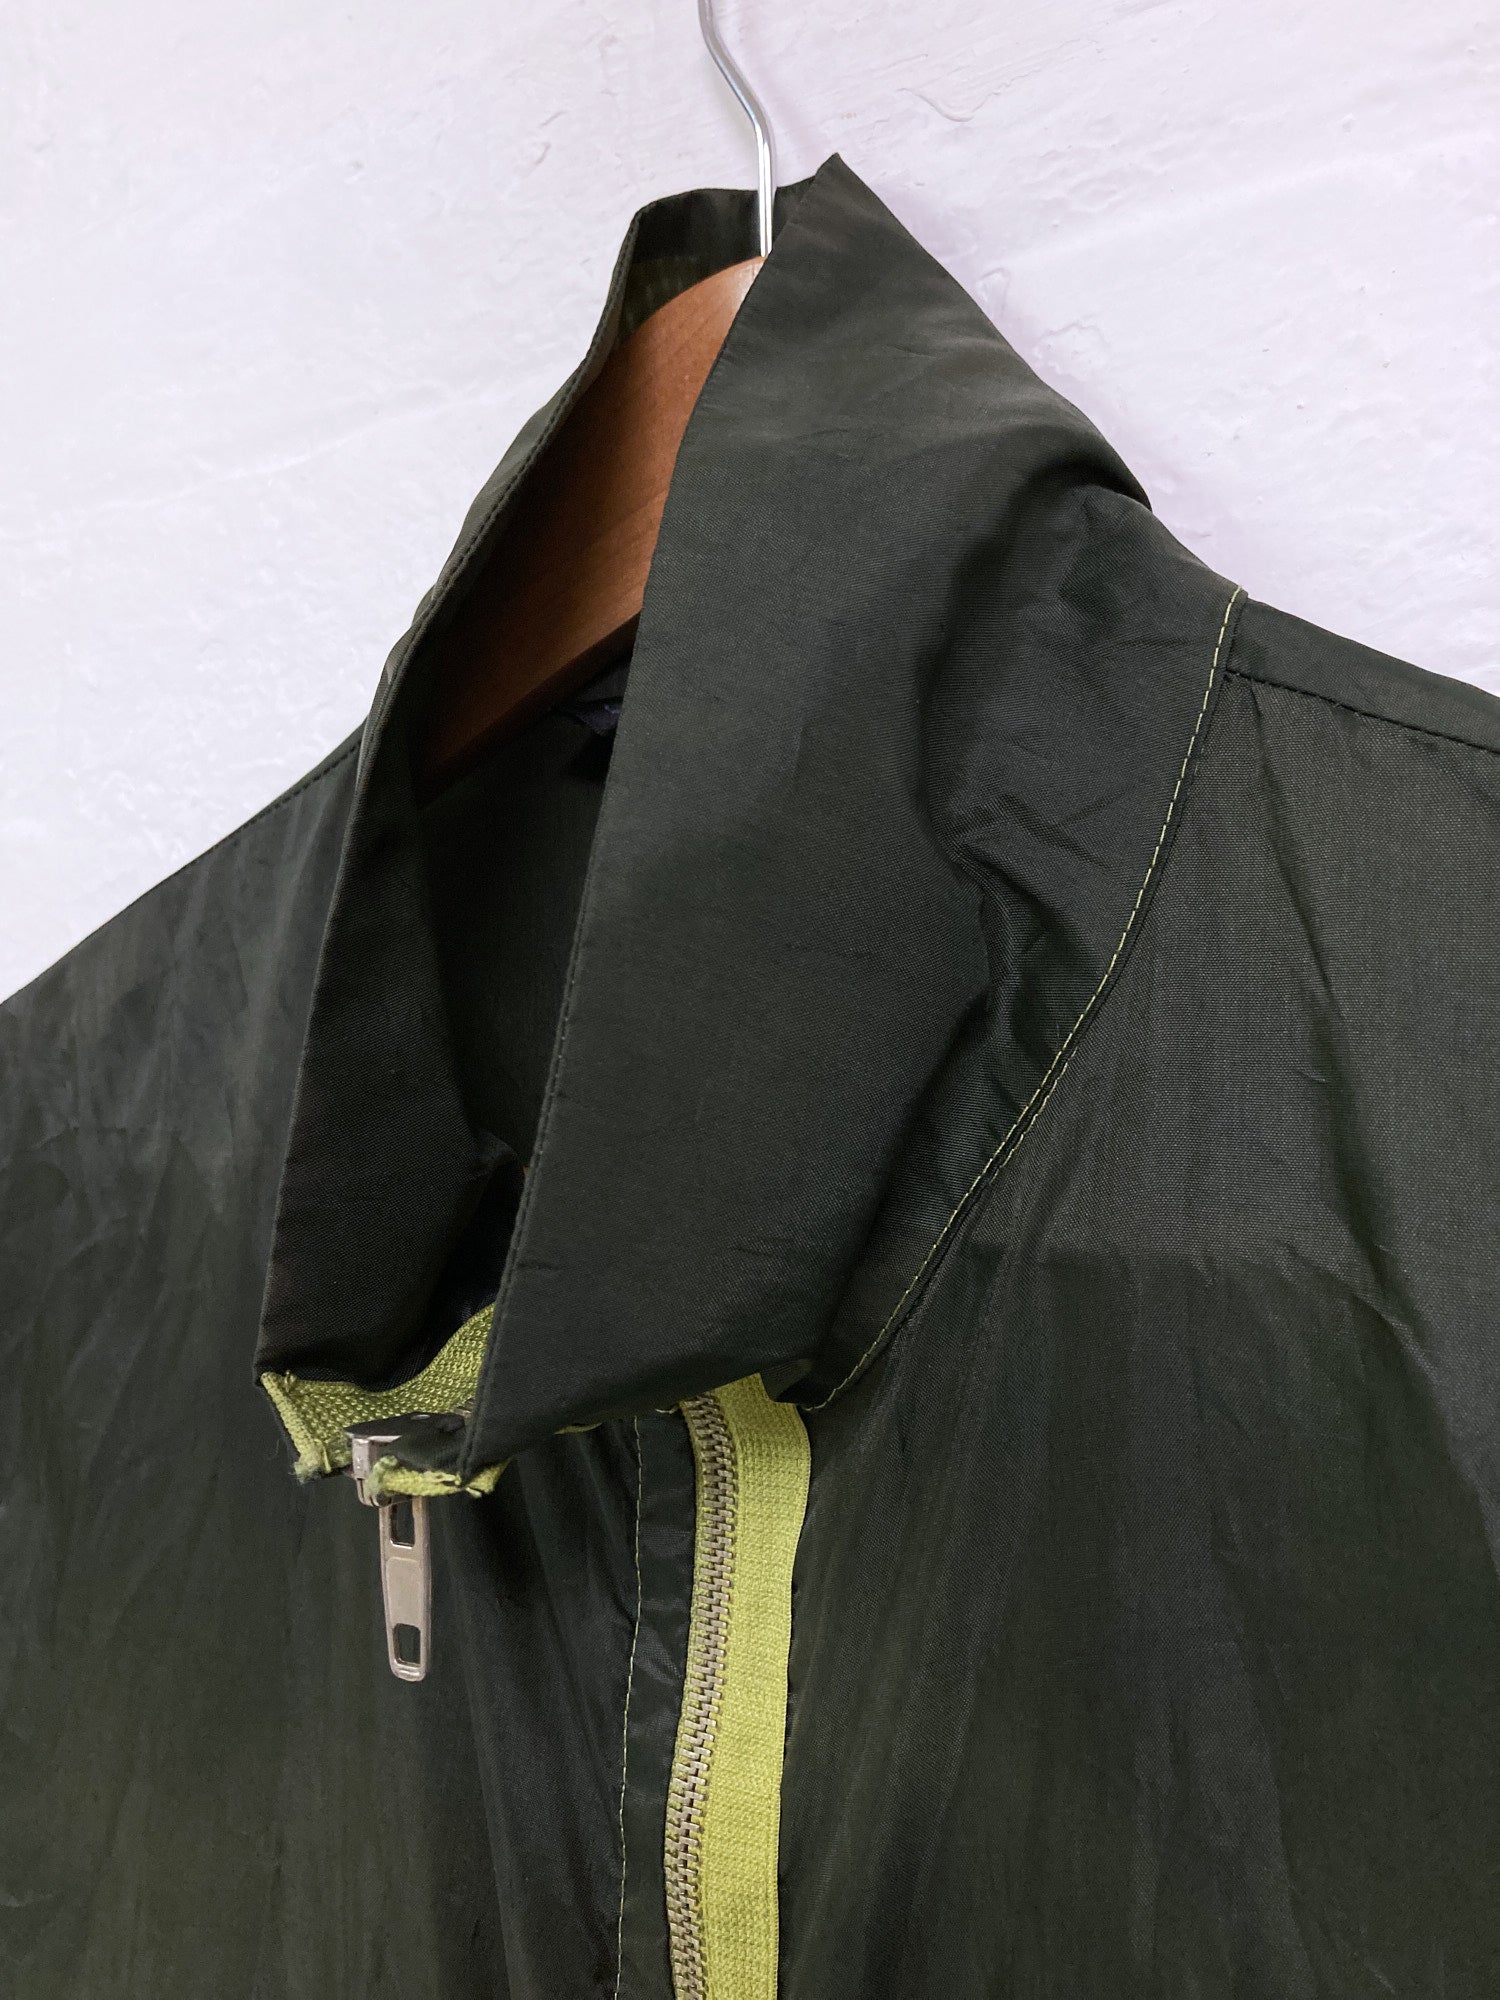 Jean Colonna dark green semi-sheer nylon high neck zip coat - 44 XS